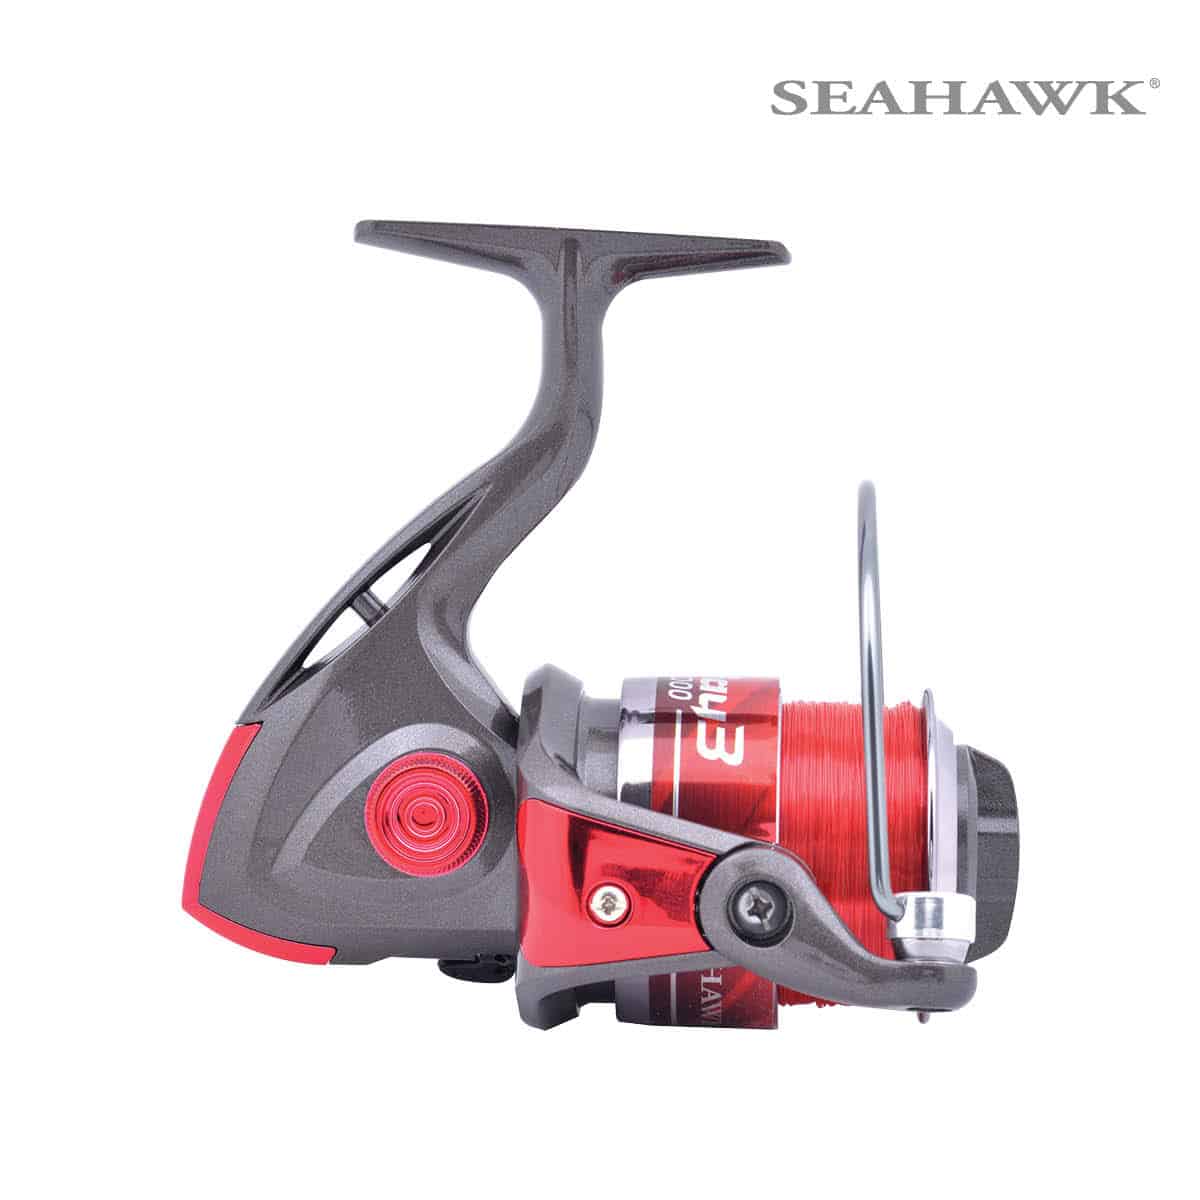 seahawk-holiday-3-hld-3-seahawk-3